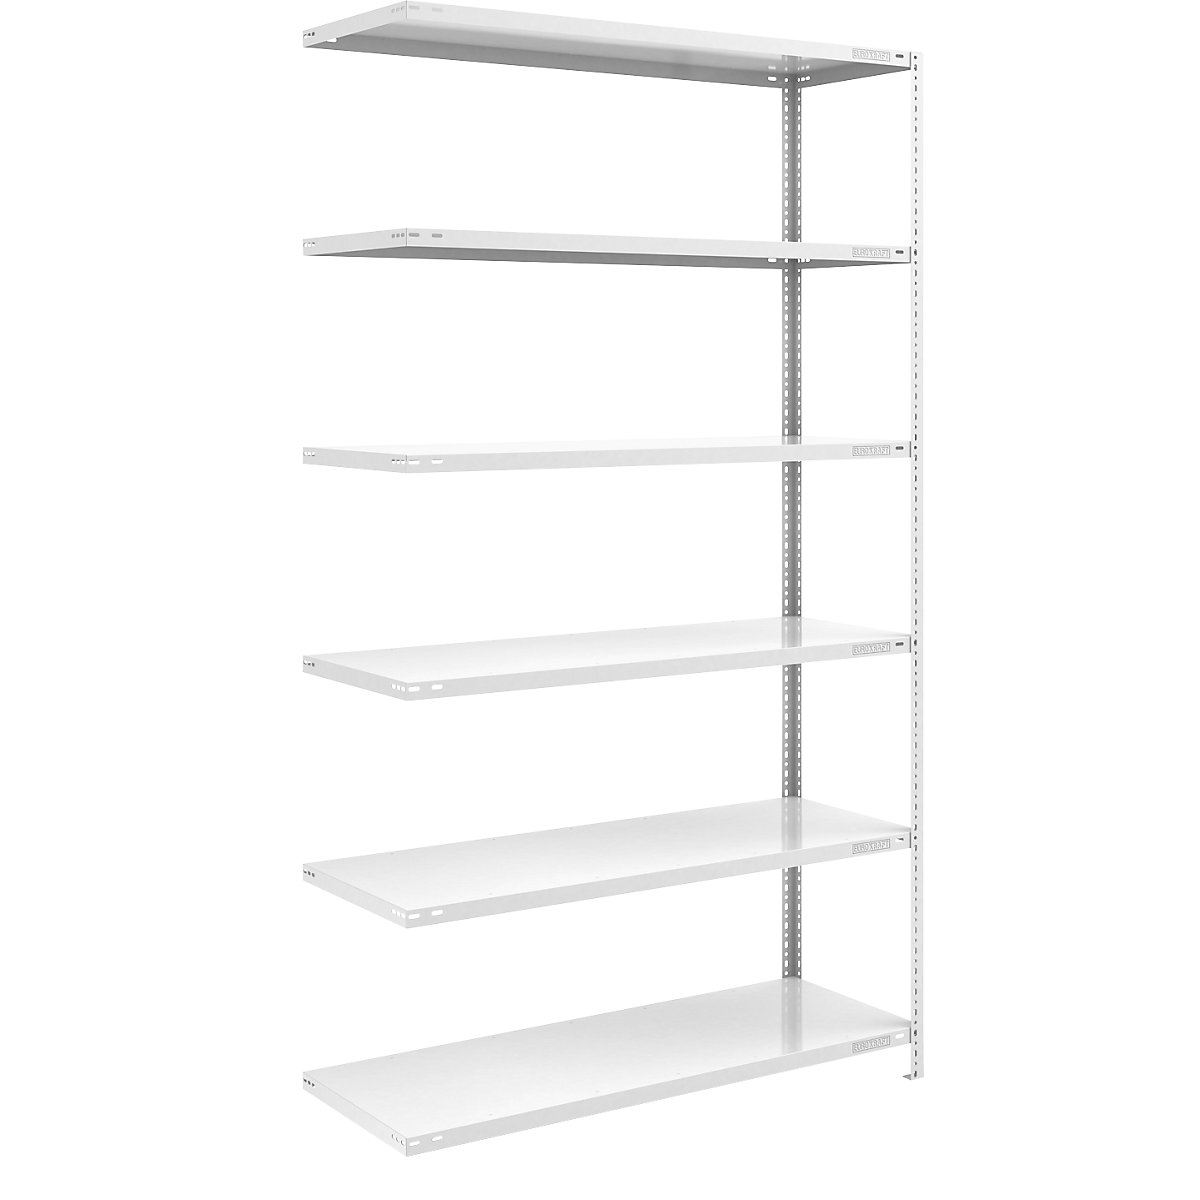 Bolt-together shelf unit, light duty, plastic coated – eurokraft pro, shelf unit height 2500 mm, shelf width 1300 mm, depth 600 mm, extension shelf unit-7